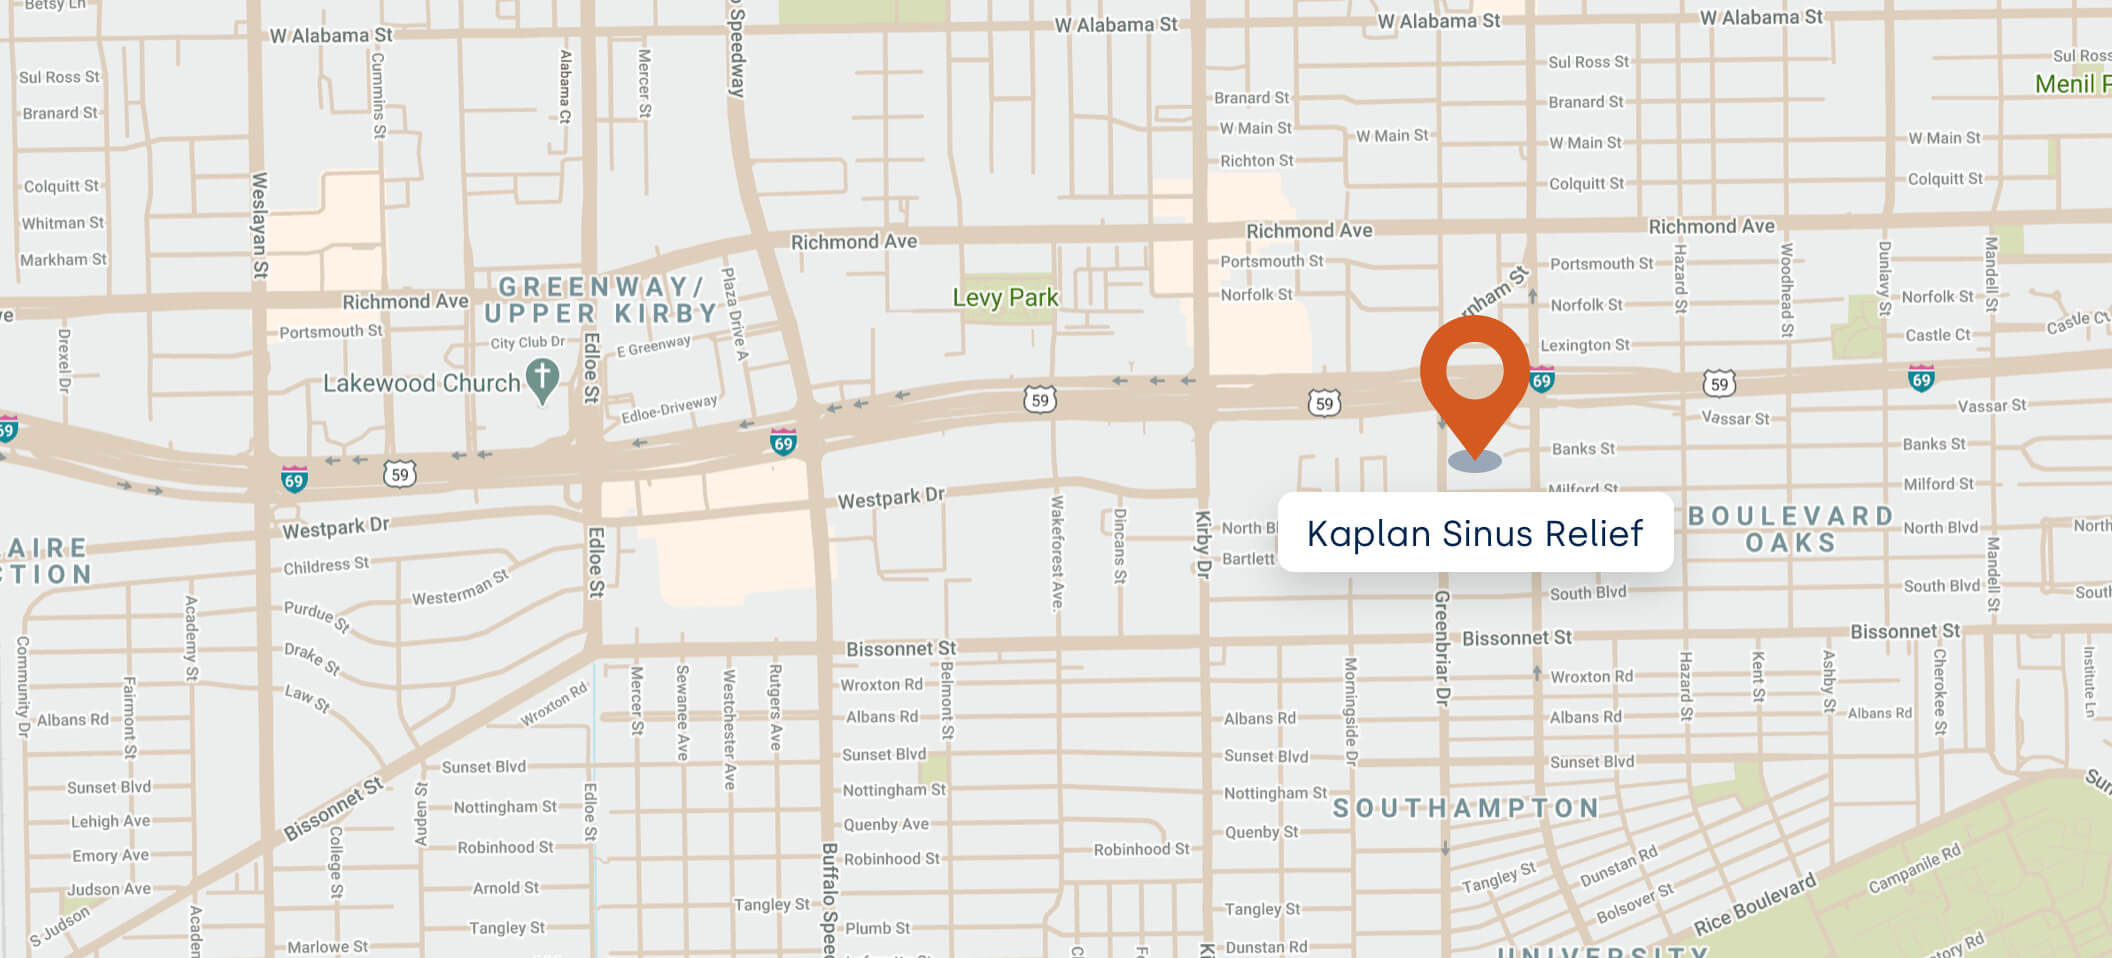 Kaplan Sinus Relief office location